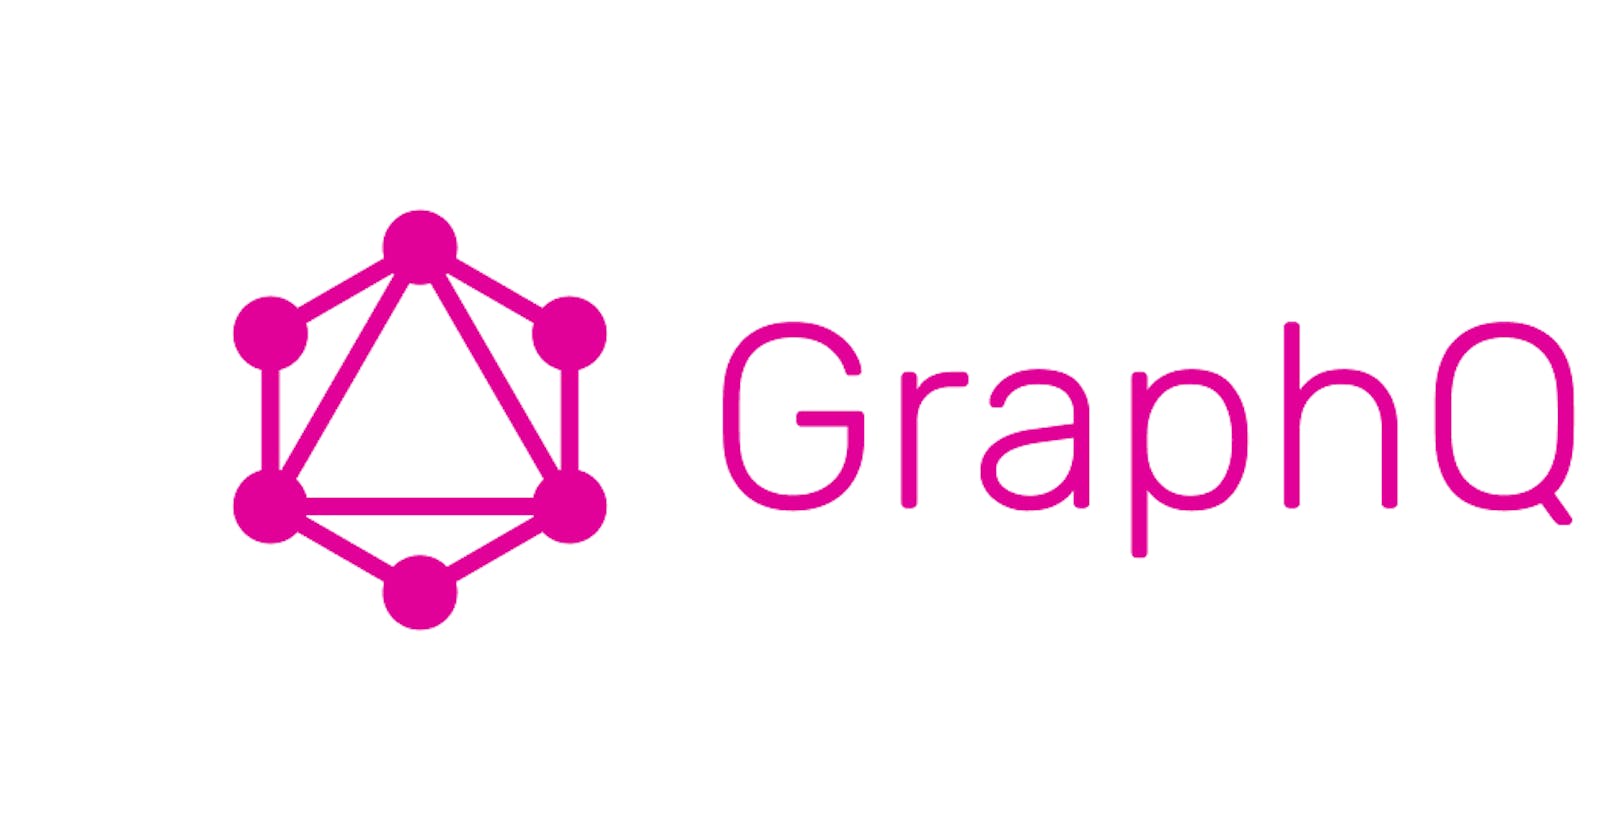 What is GraphQL?